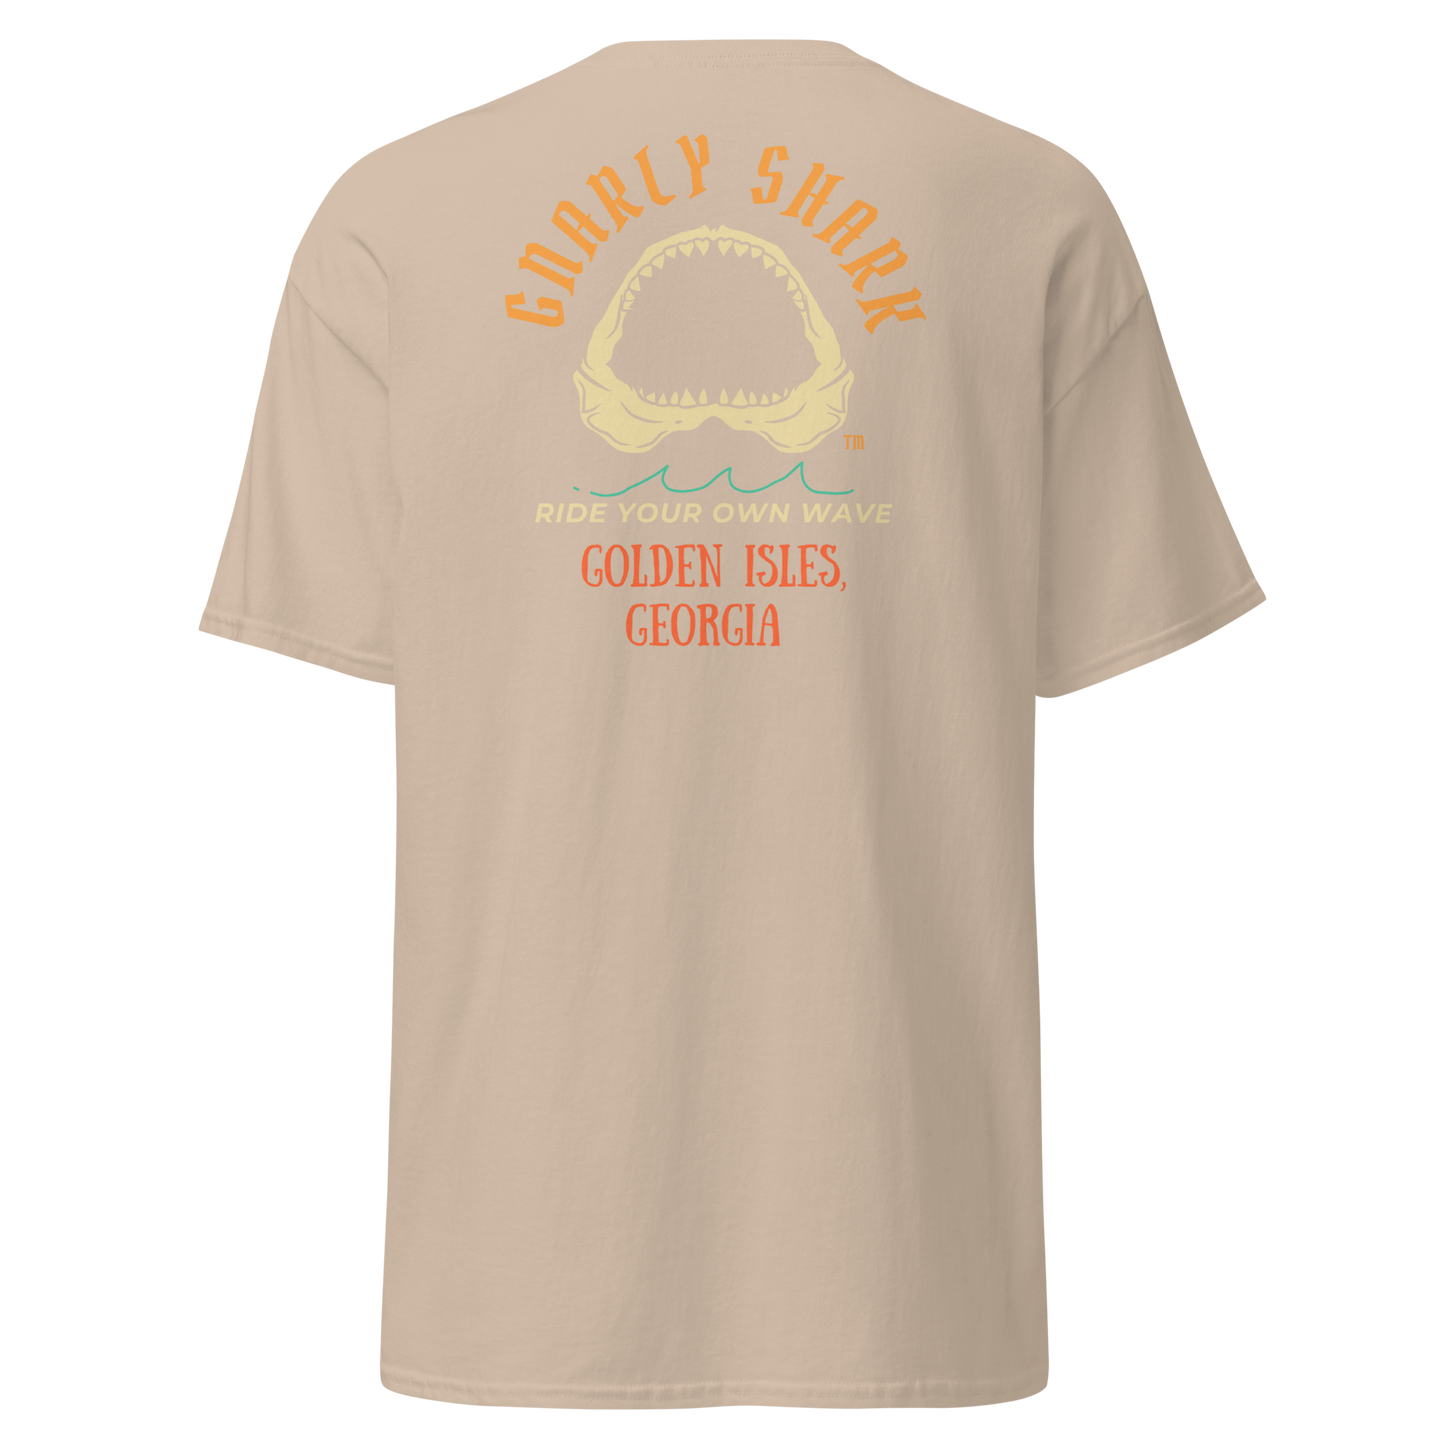 Gnarly Shark Golden Isles Georgia T-Shirt - Front / Back - Gildan classic 5000